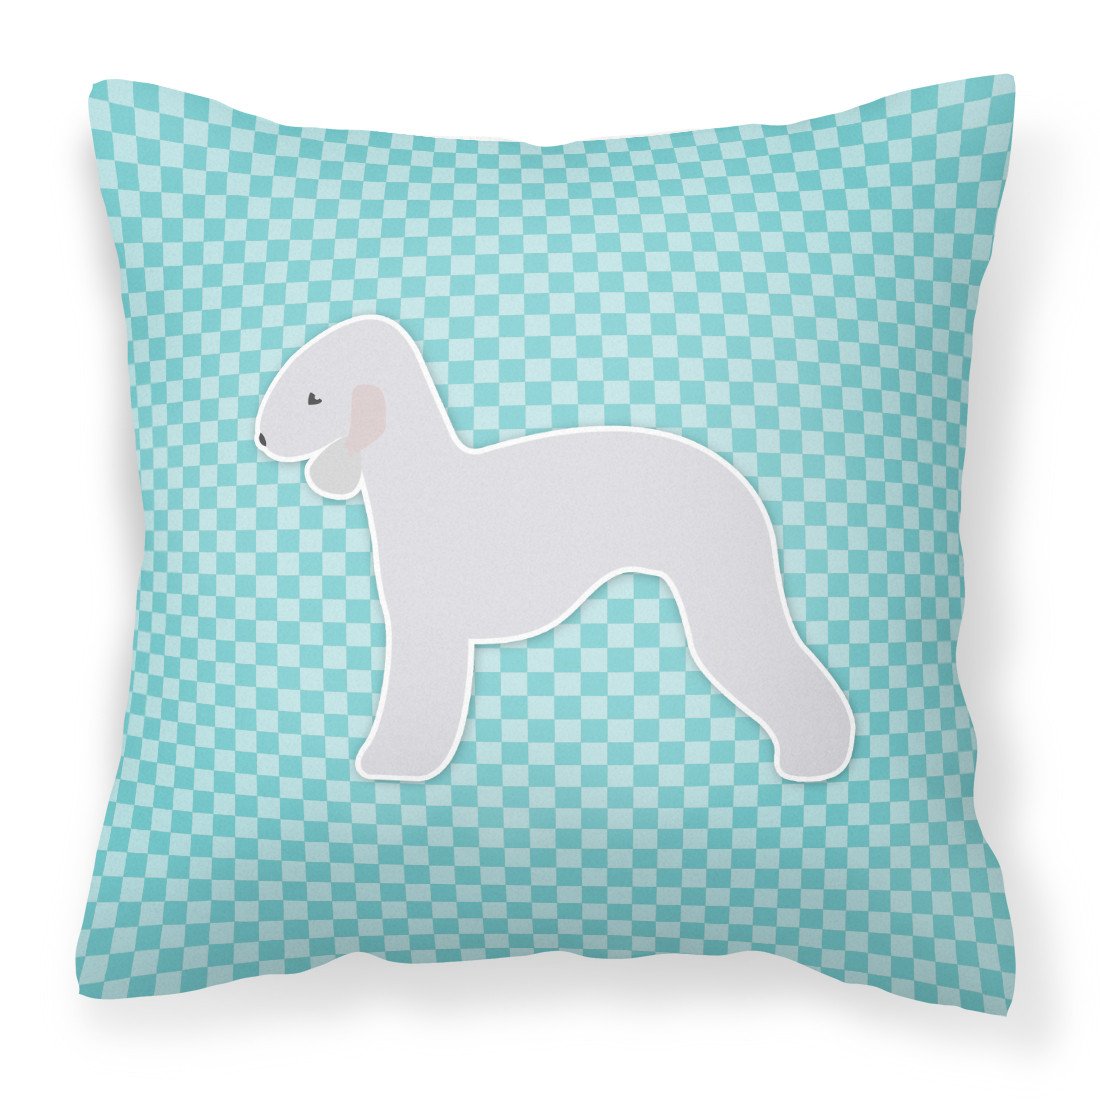 Bedlington Terrier  Checkerboard Blue Fabric Decorative Pillow BB3694PW1818 by Caroline's Treasures